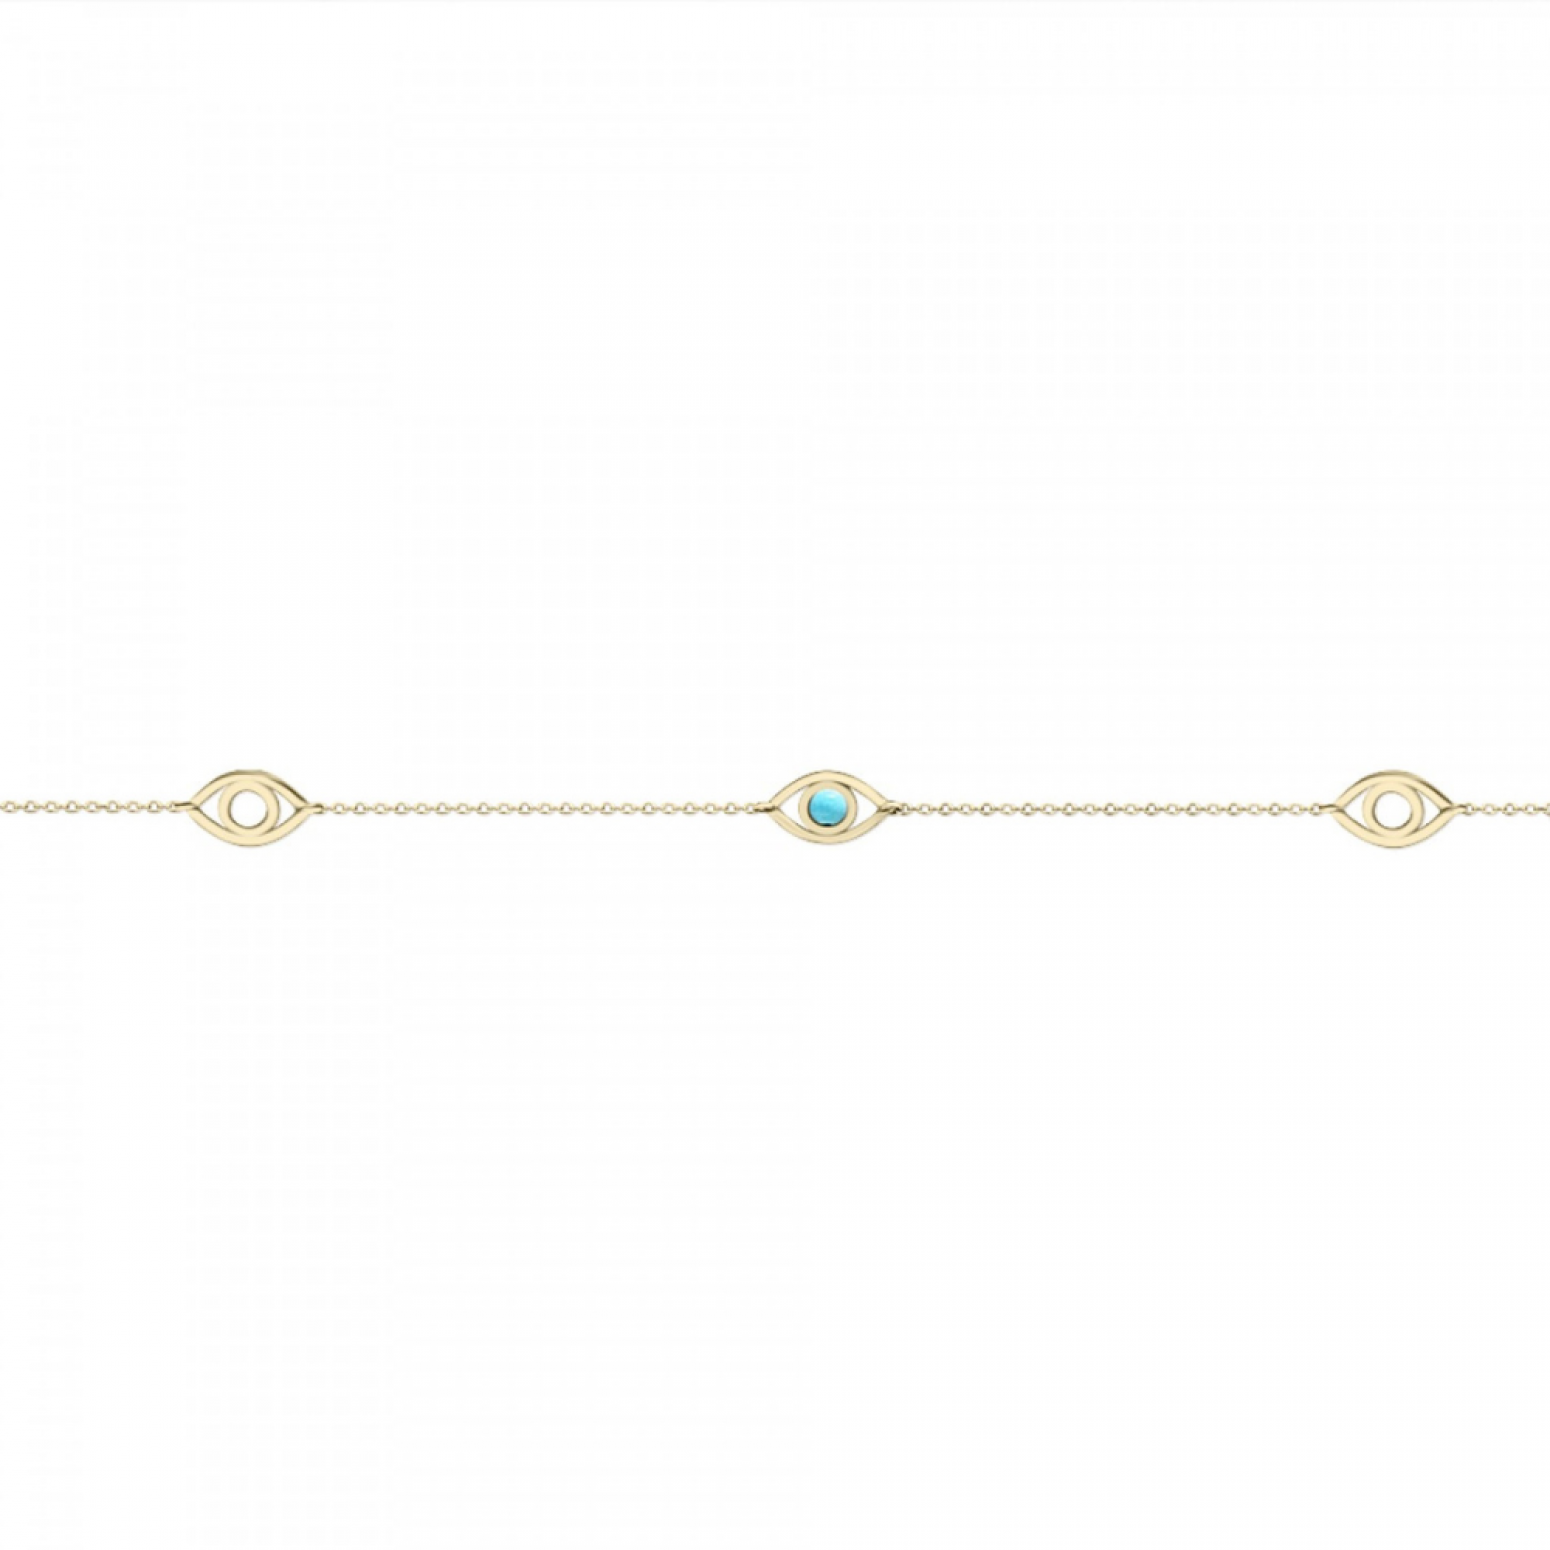 Bracelet with eyes, Κ14 gold with turquoise, pb0362 BRACELETS Κοσμηματα - chrilia.gr